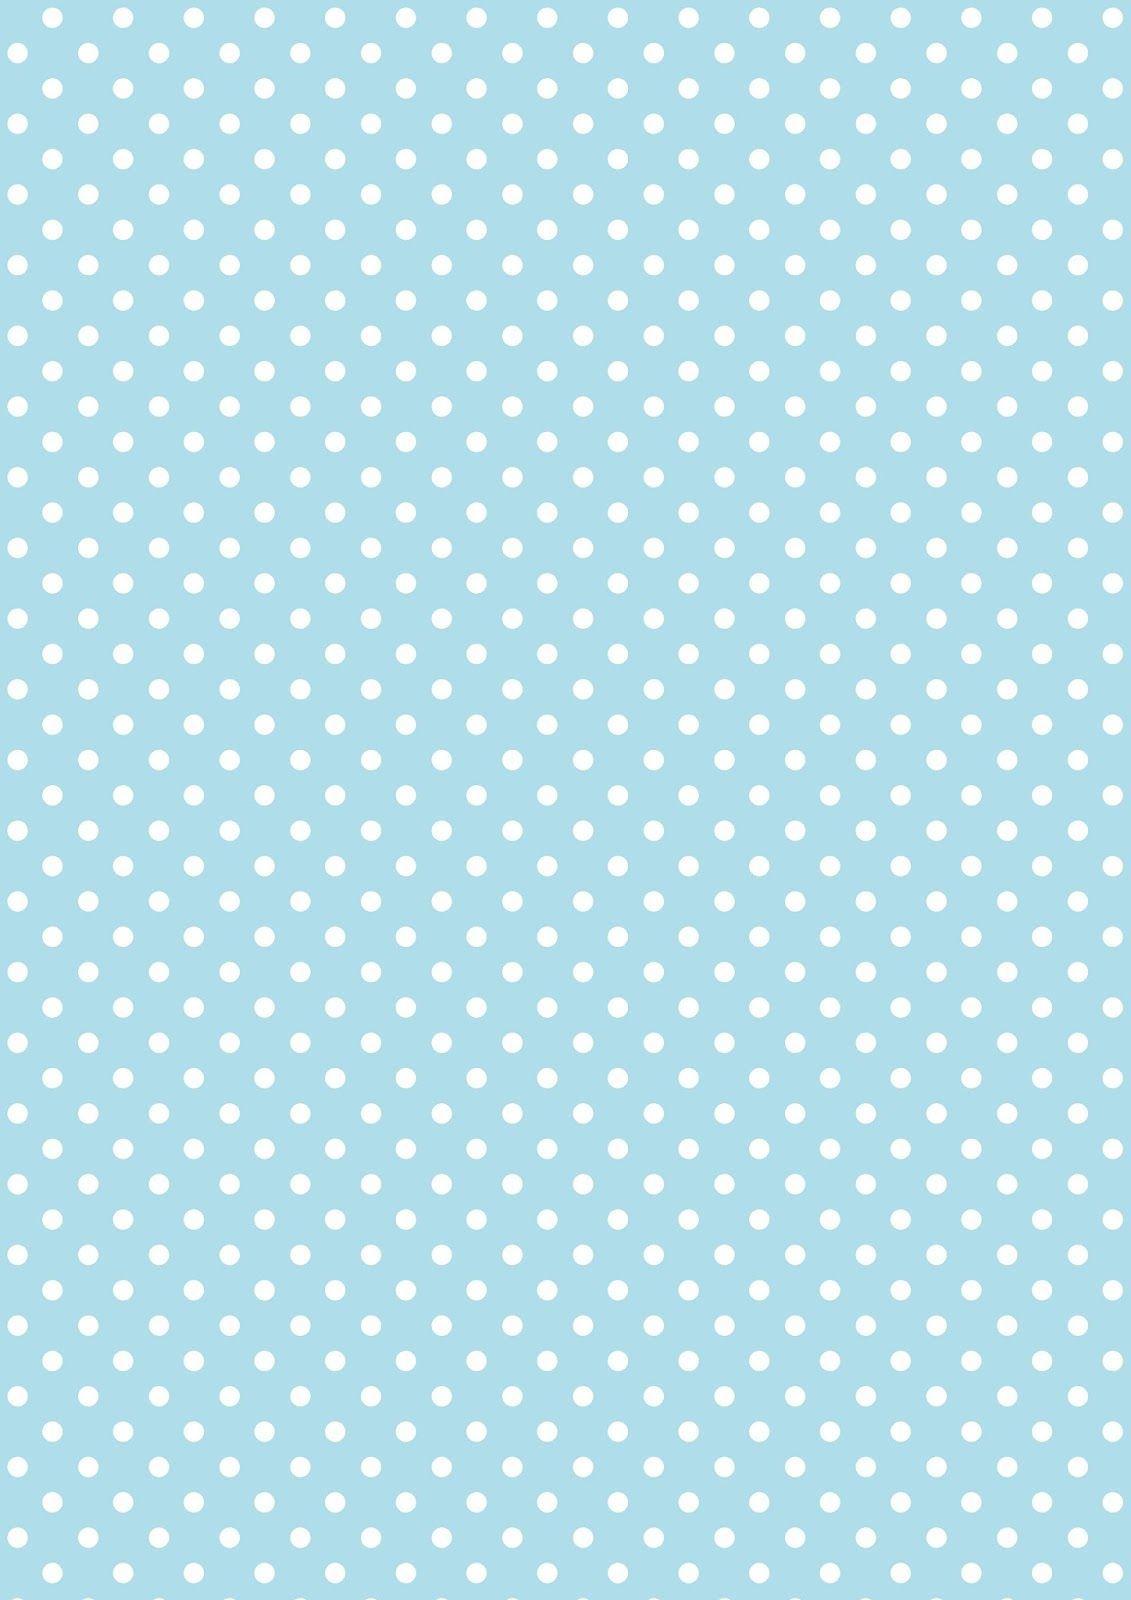 Free digital polka dot scrapbooking paper: baby blue